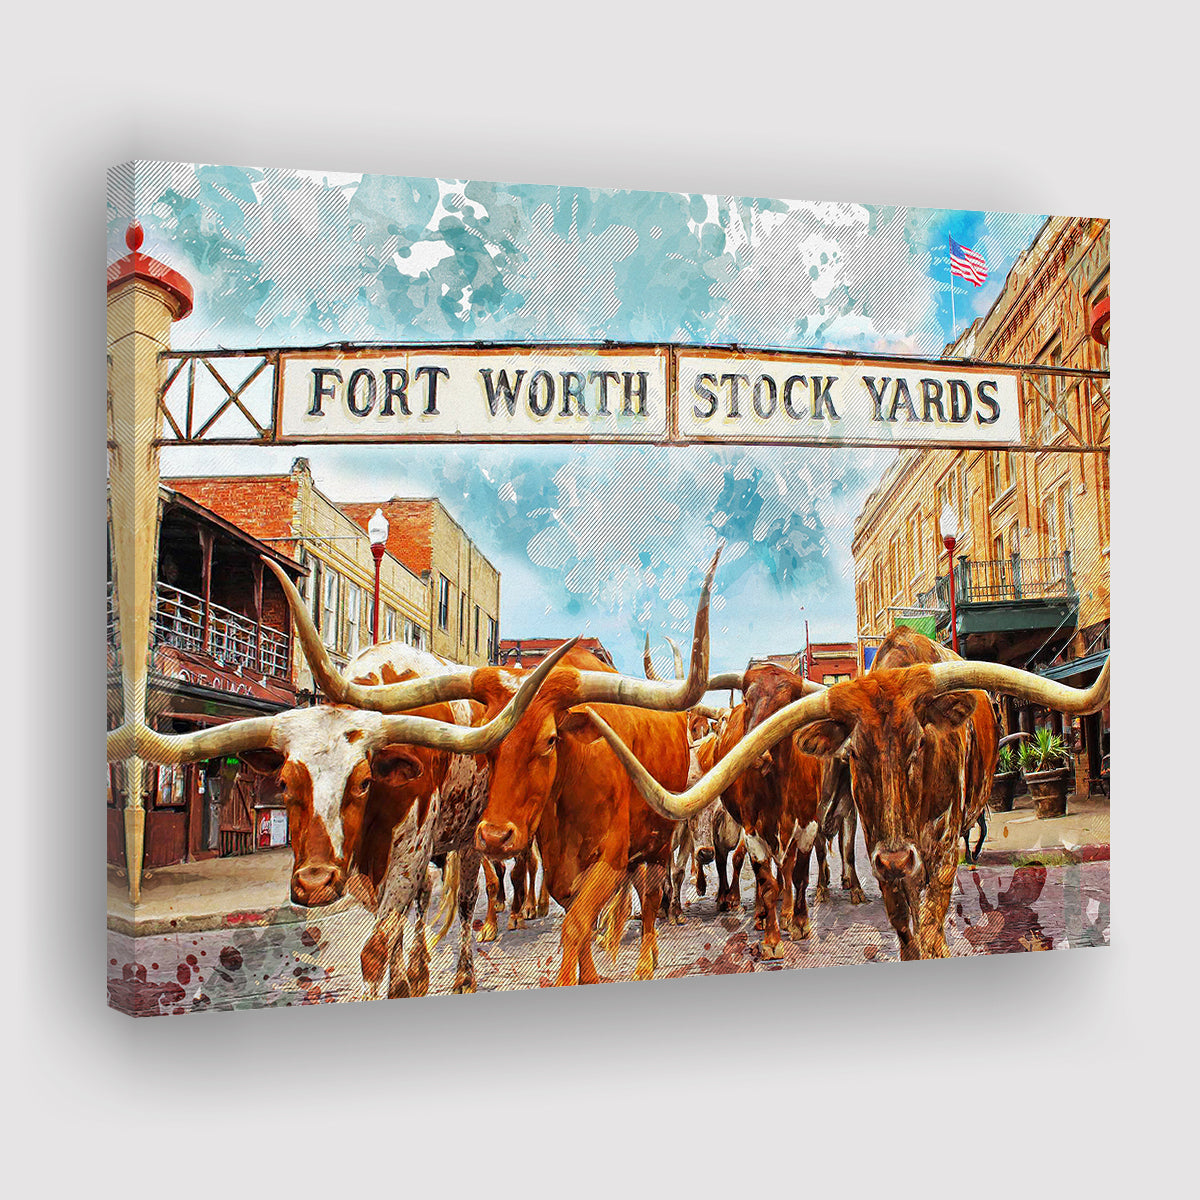 Fort Worth Stockyards Business Association